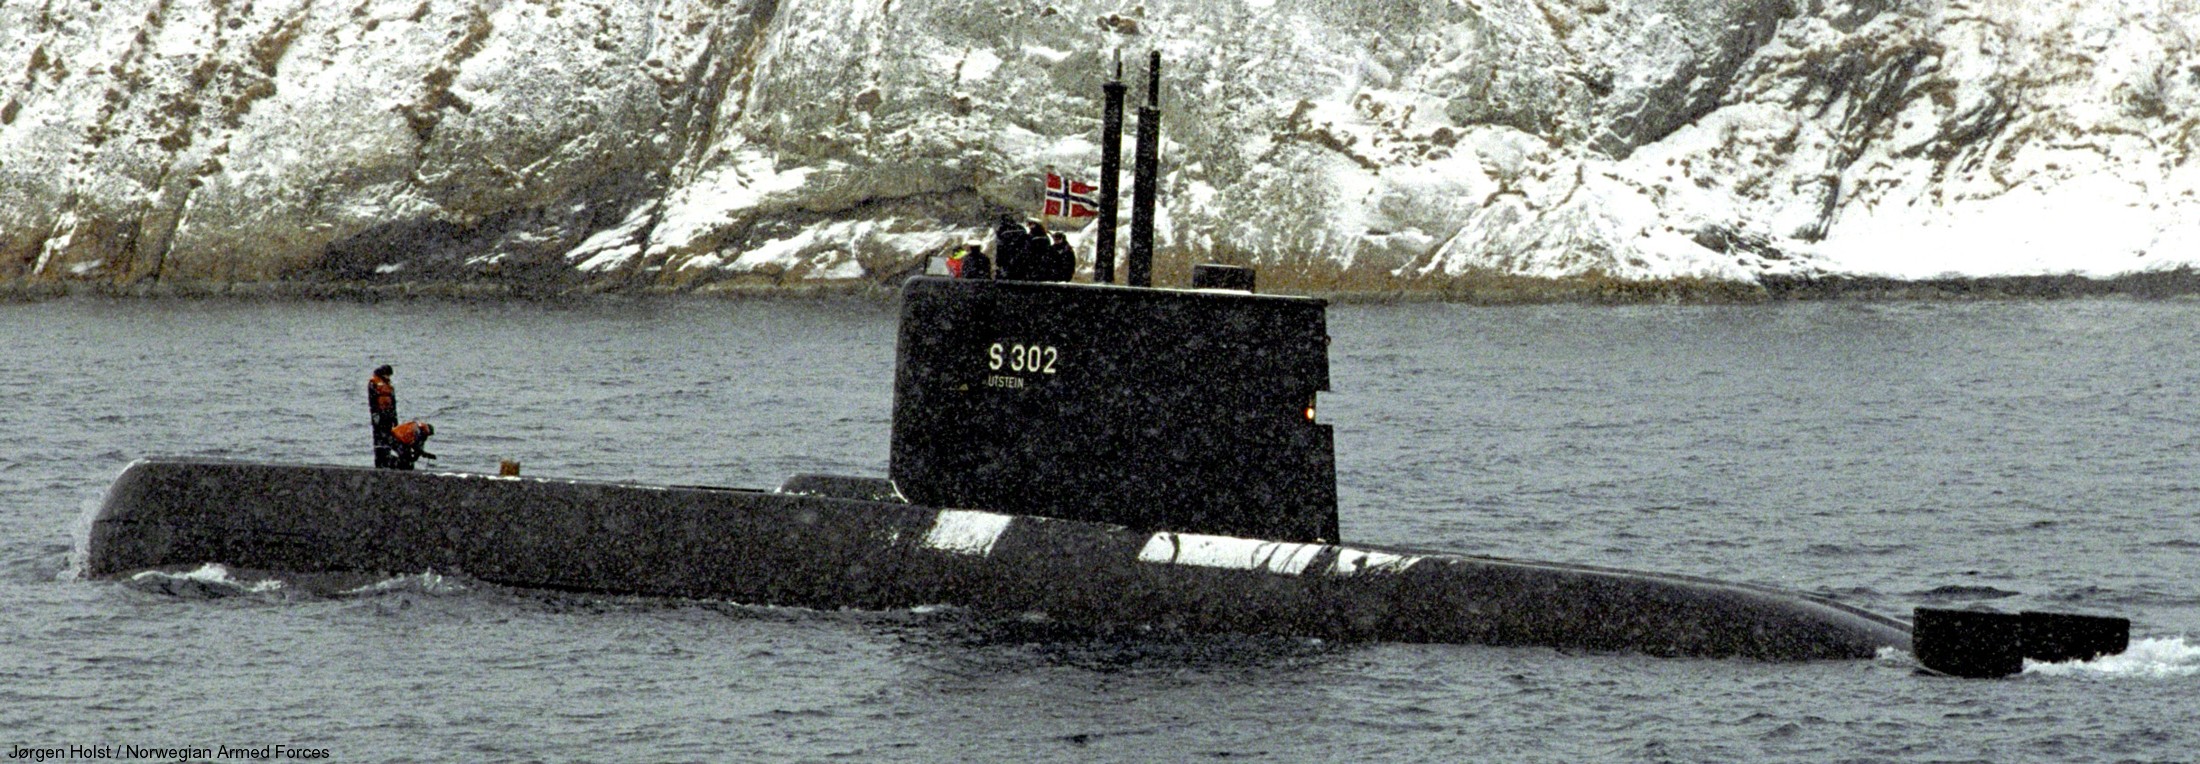 s-302 hnoms knm utstein ula class submarine type 210 attack ssk undervannsbåt royal norwegian navy sjøforsvaret 02